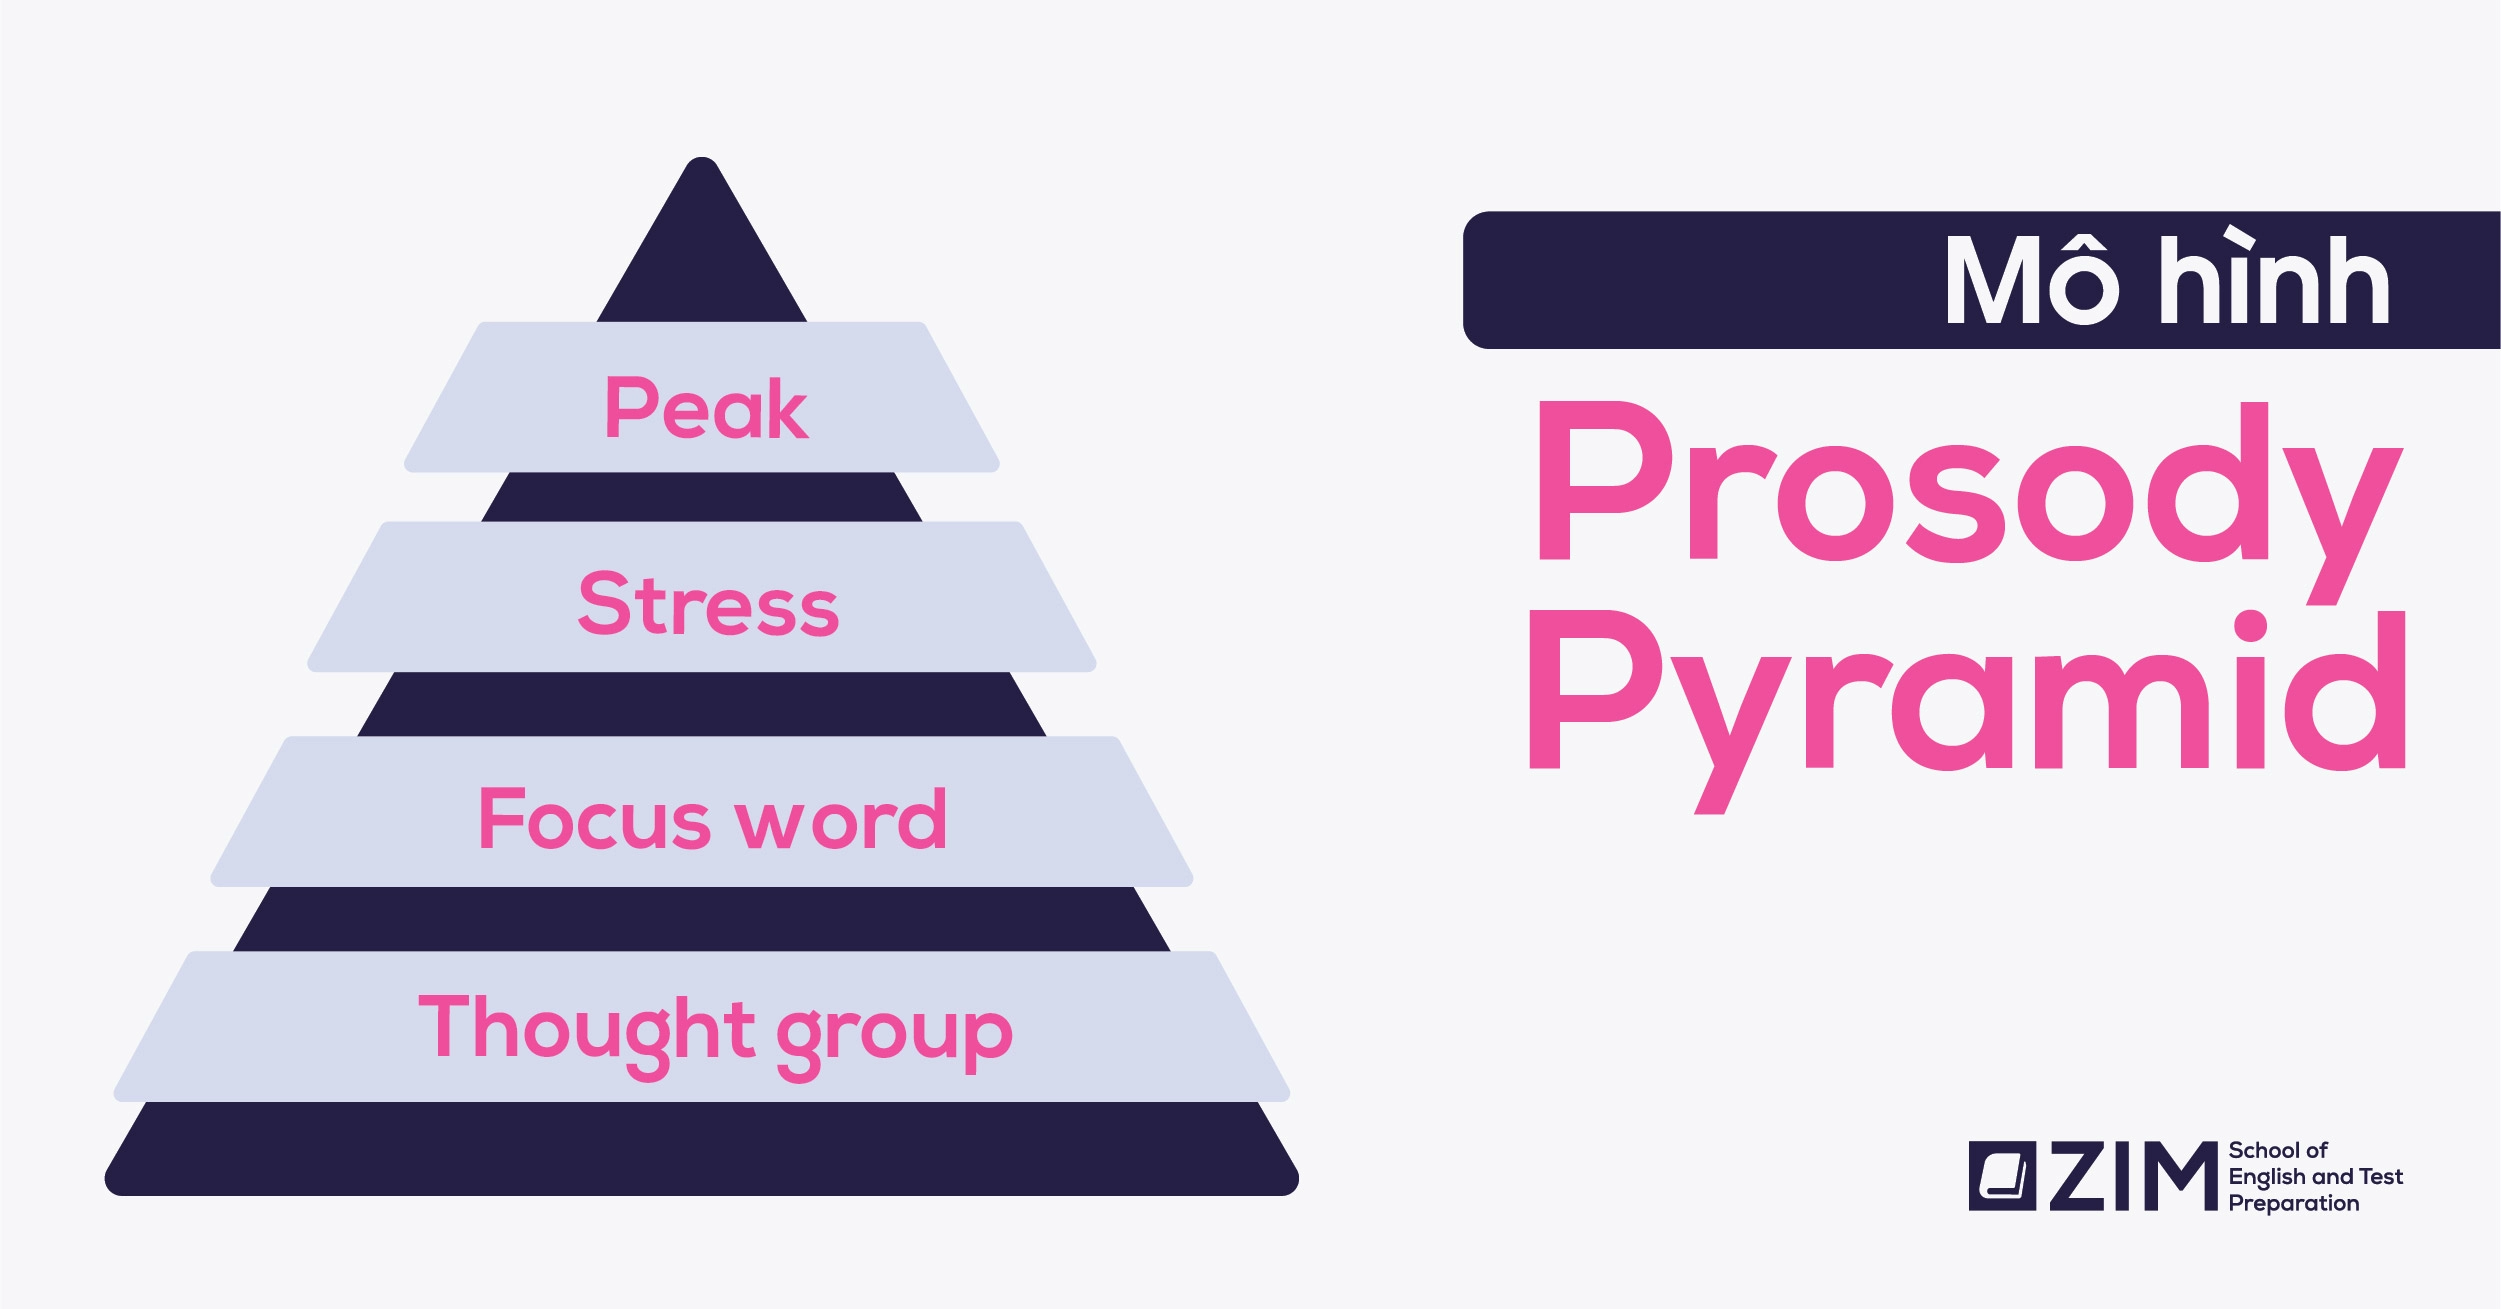 prosody pyramid la gi cach ung dung prosody pyramid vao viec hoc phat am